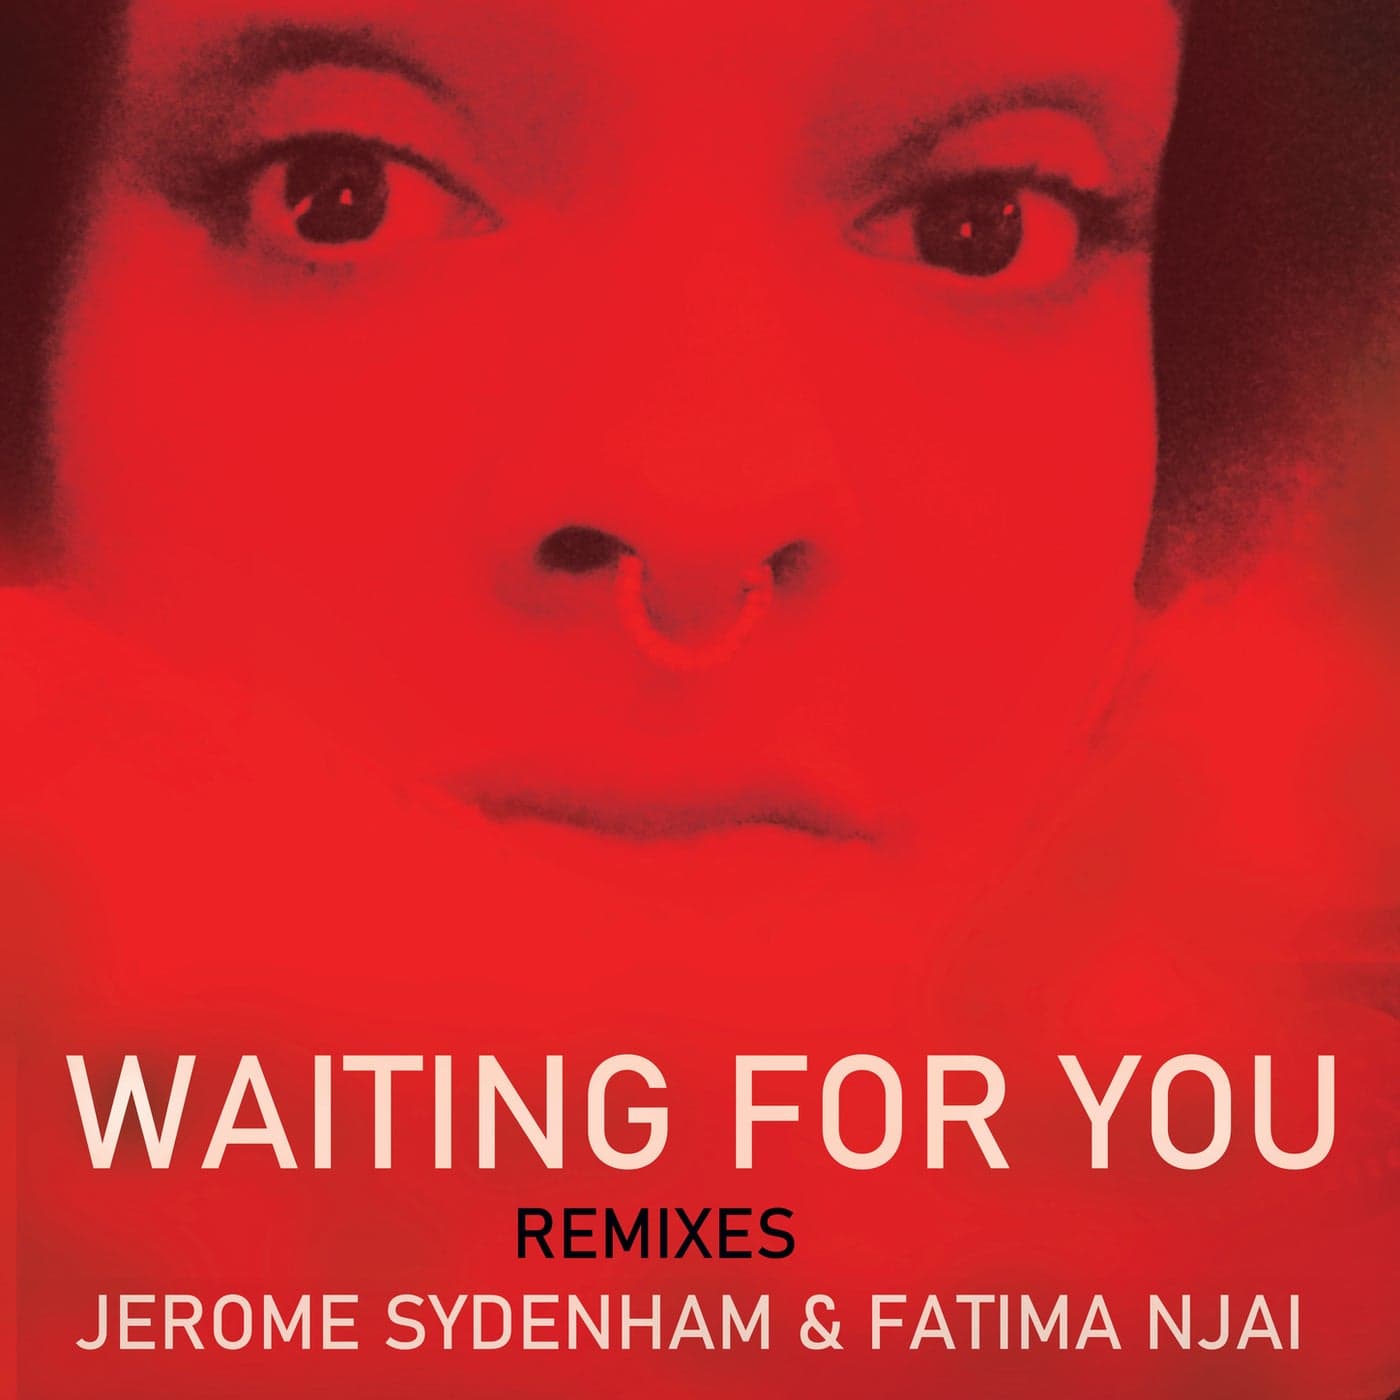 image cover: Jerome Sydenham, Fatima Njai - Waiting For You (Remixes) / KMAT018